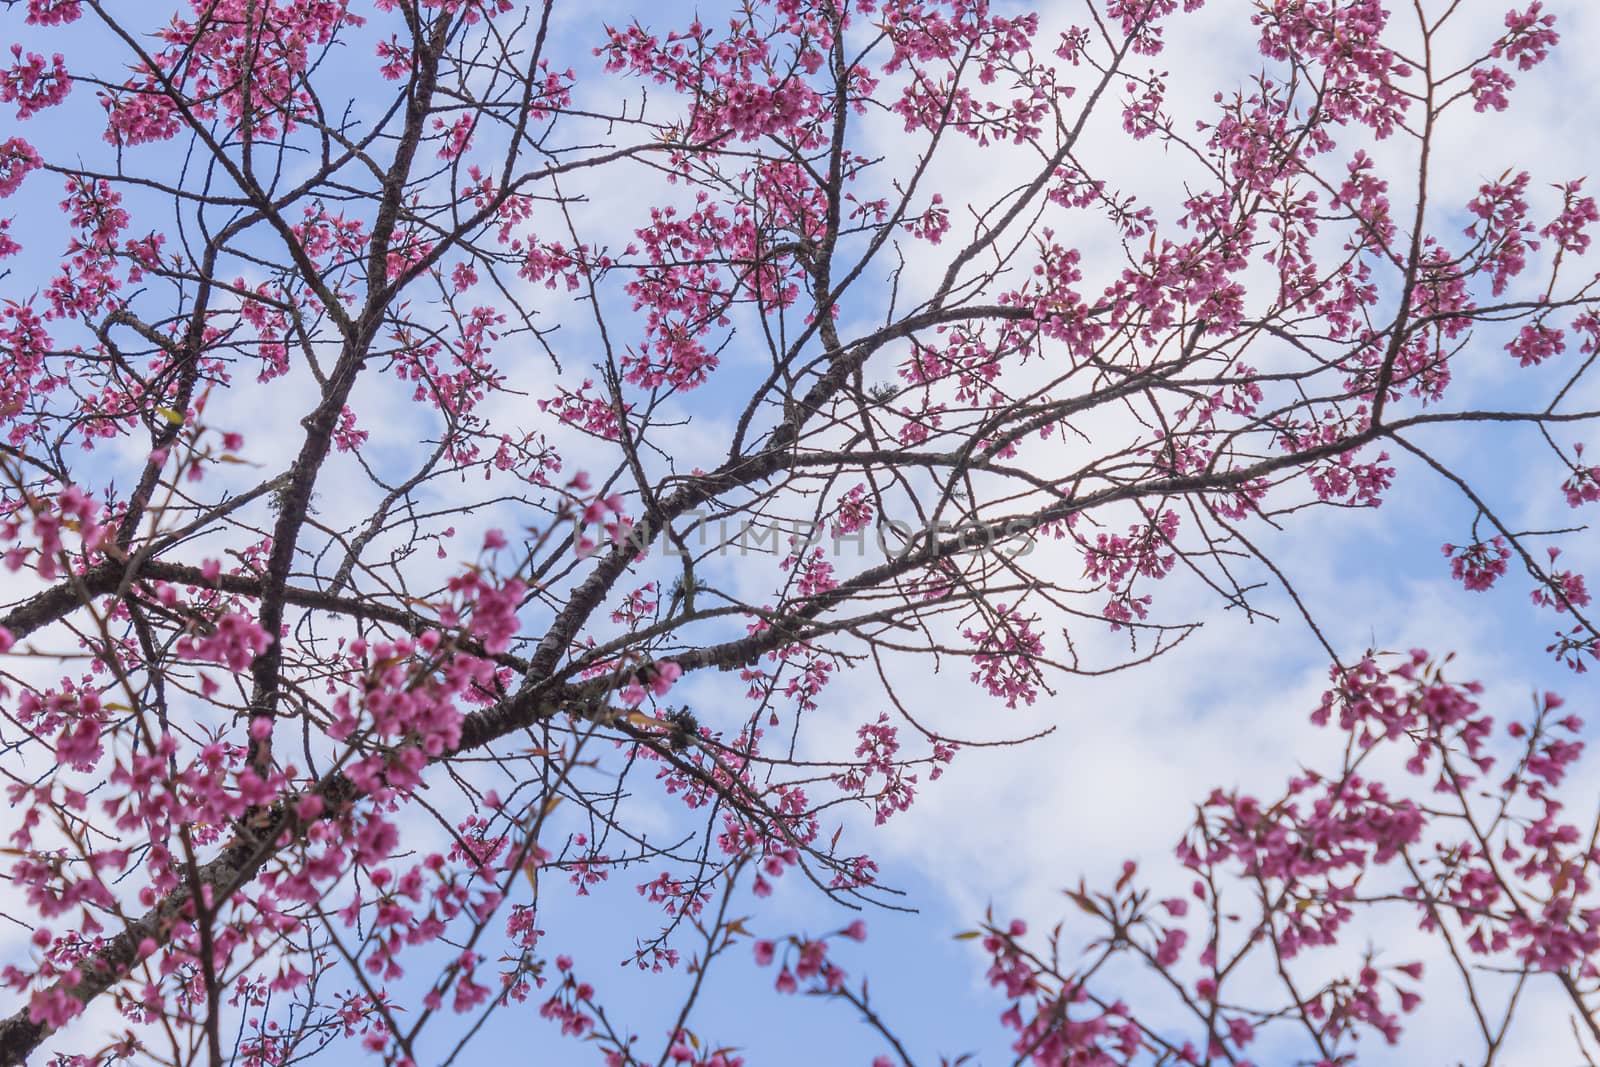 Prunus Cerasoides or Cherry Blossom or Sakura Flower on Blue Sky by steafpong